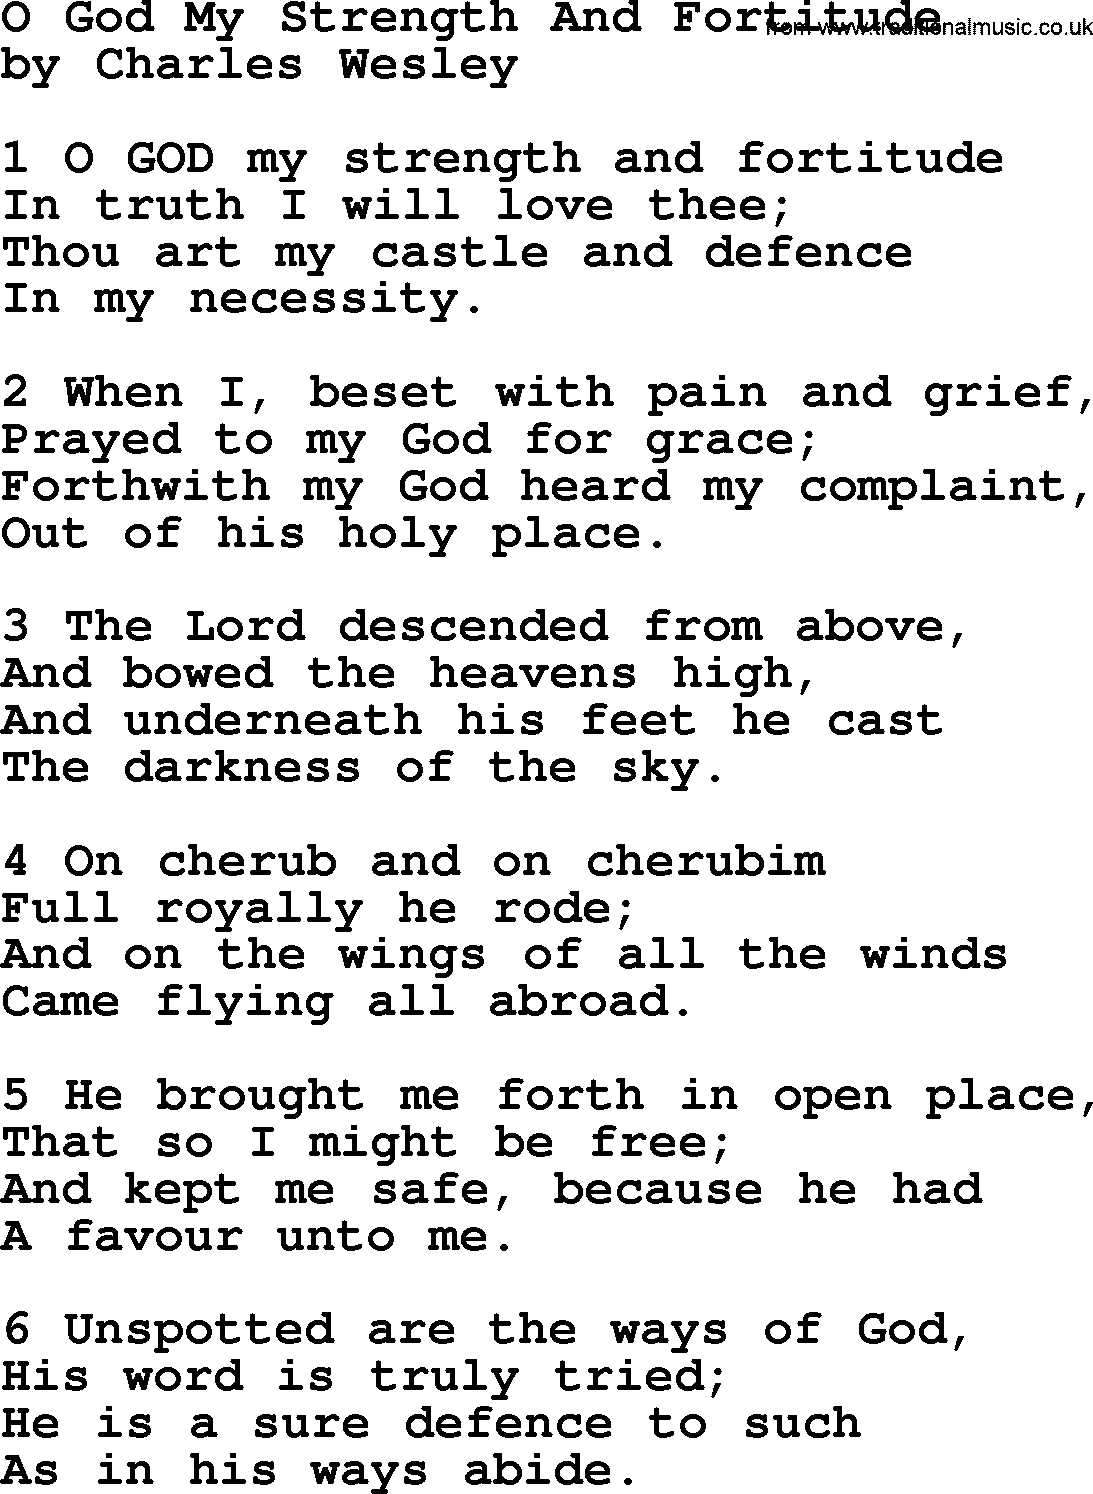 Charles Wesley hymn: O God My Strength And Fortitude, lyrics